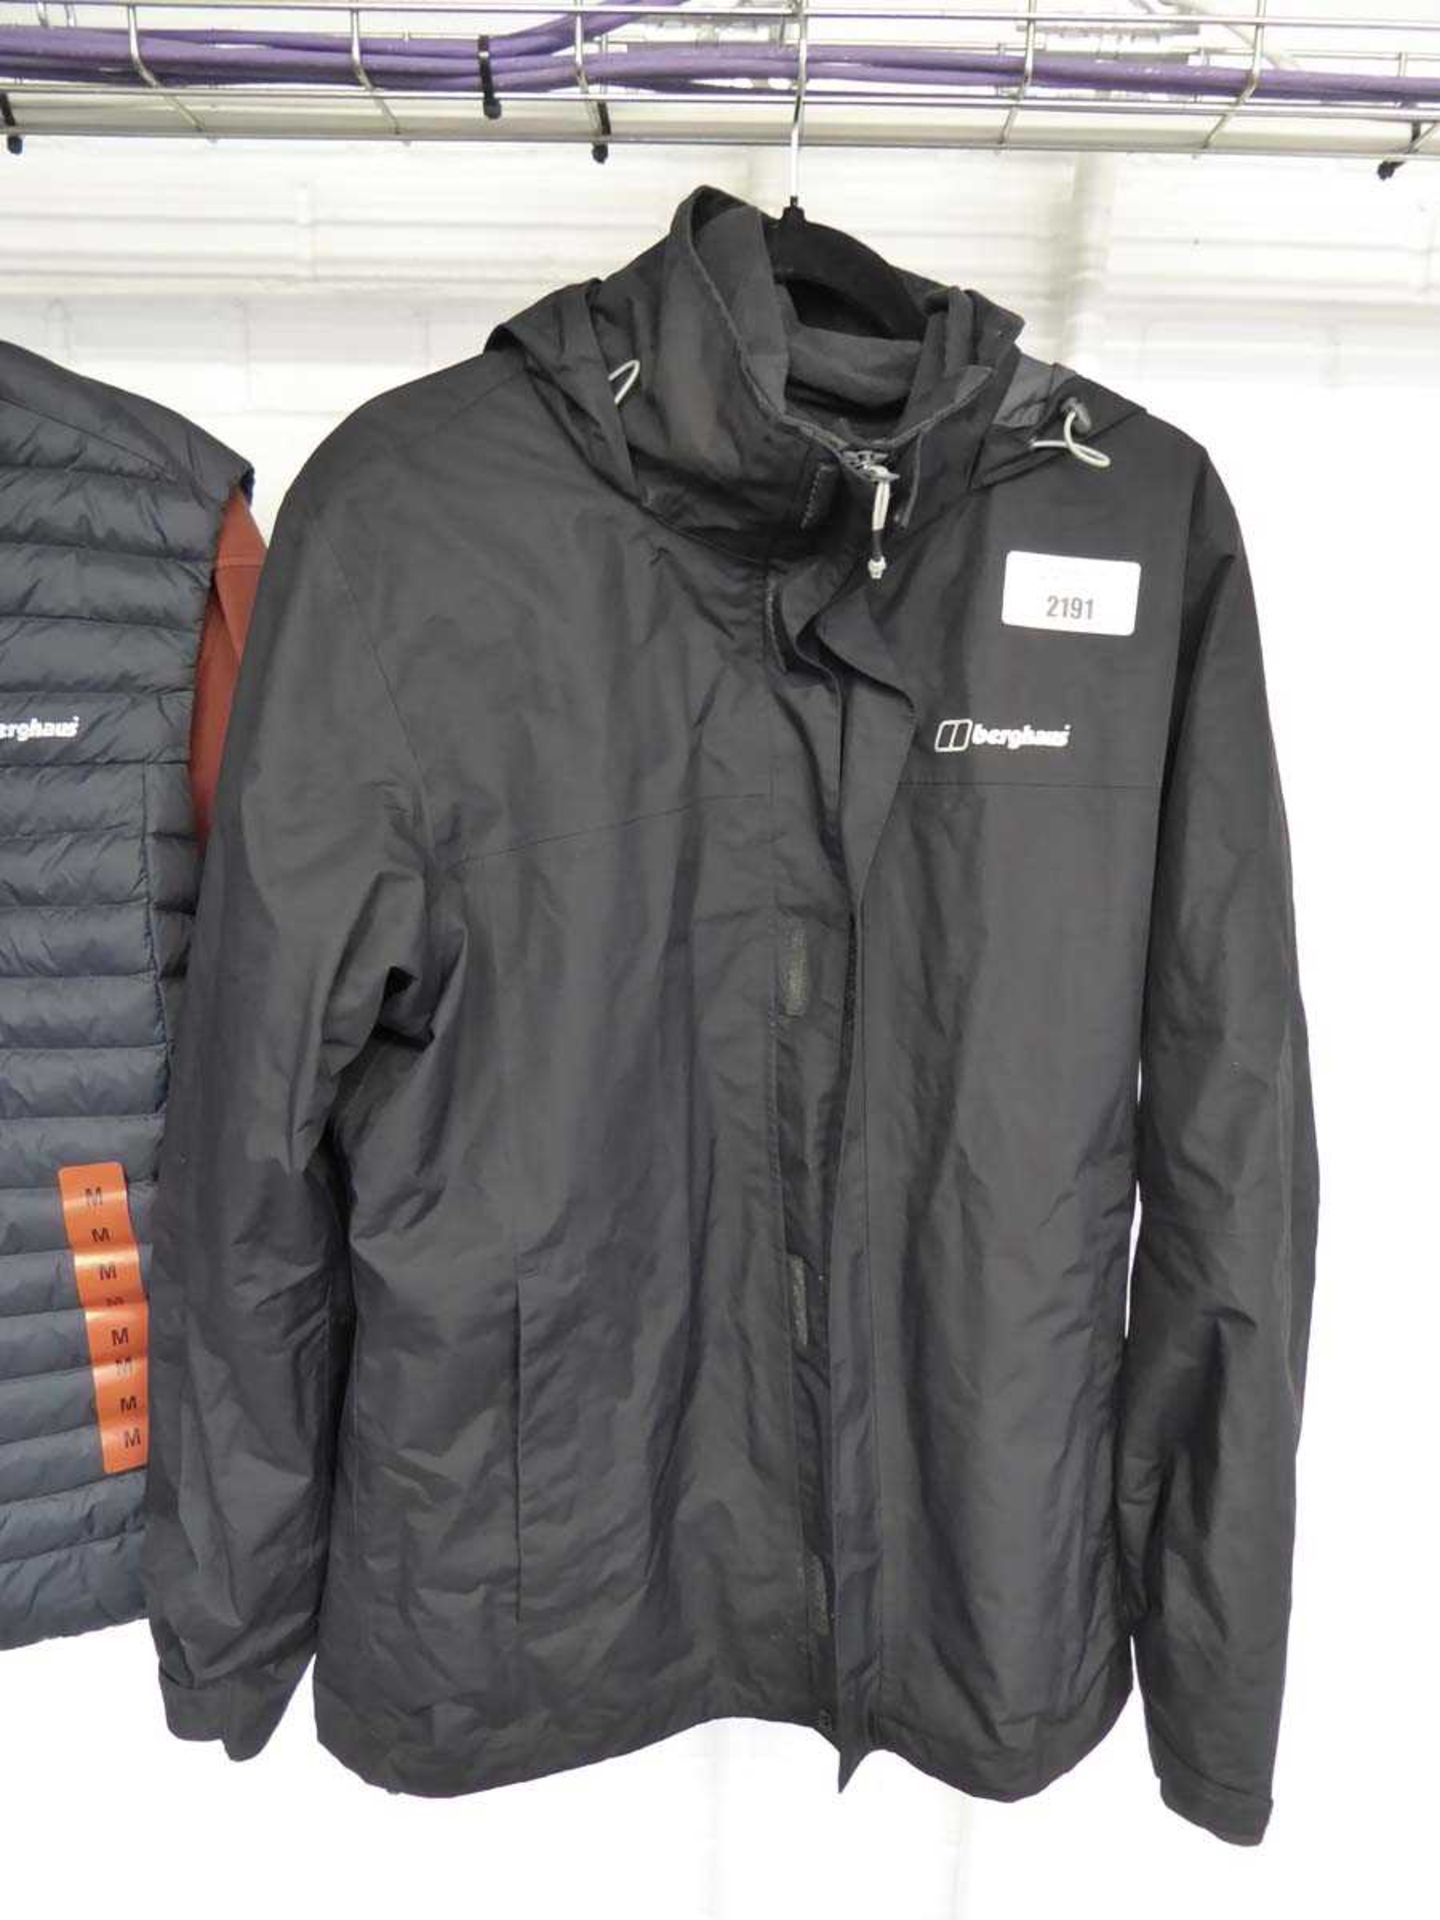 +VAT Berghaus black zip up jacket (size L)